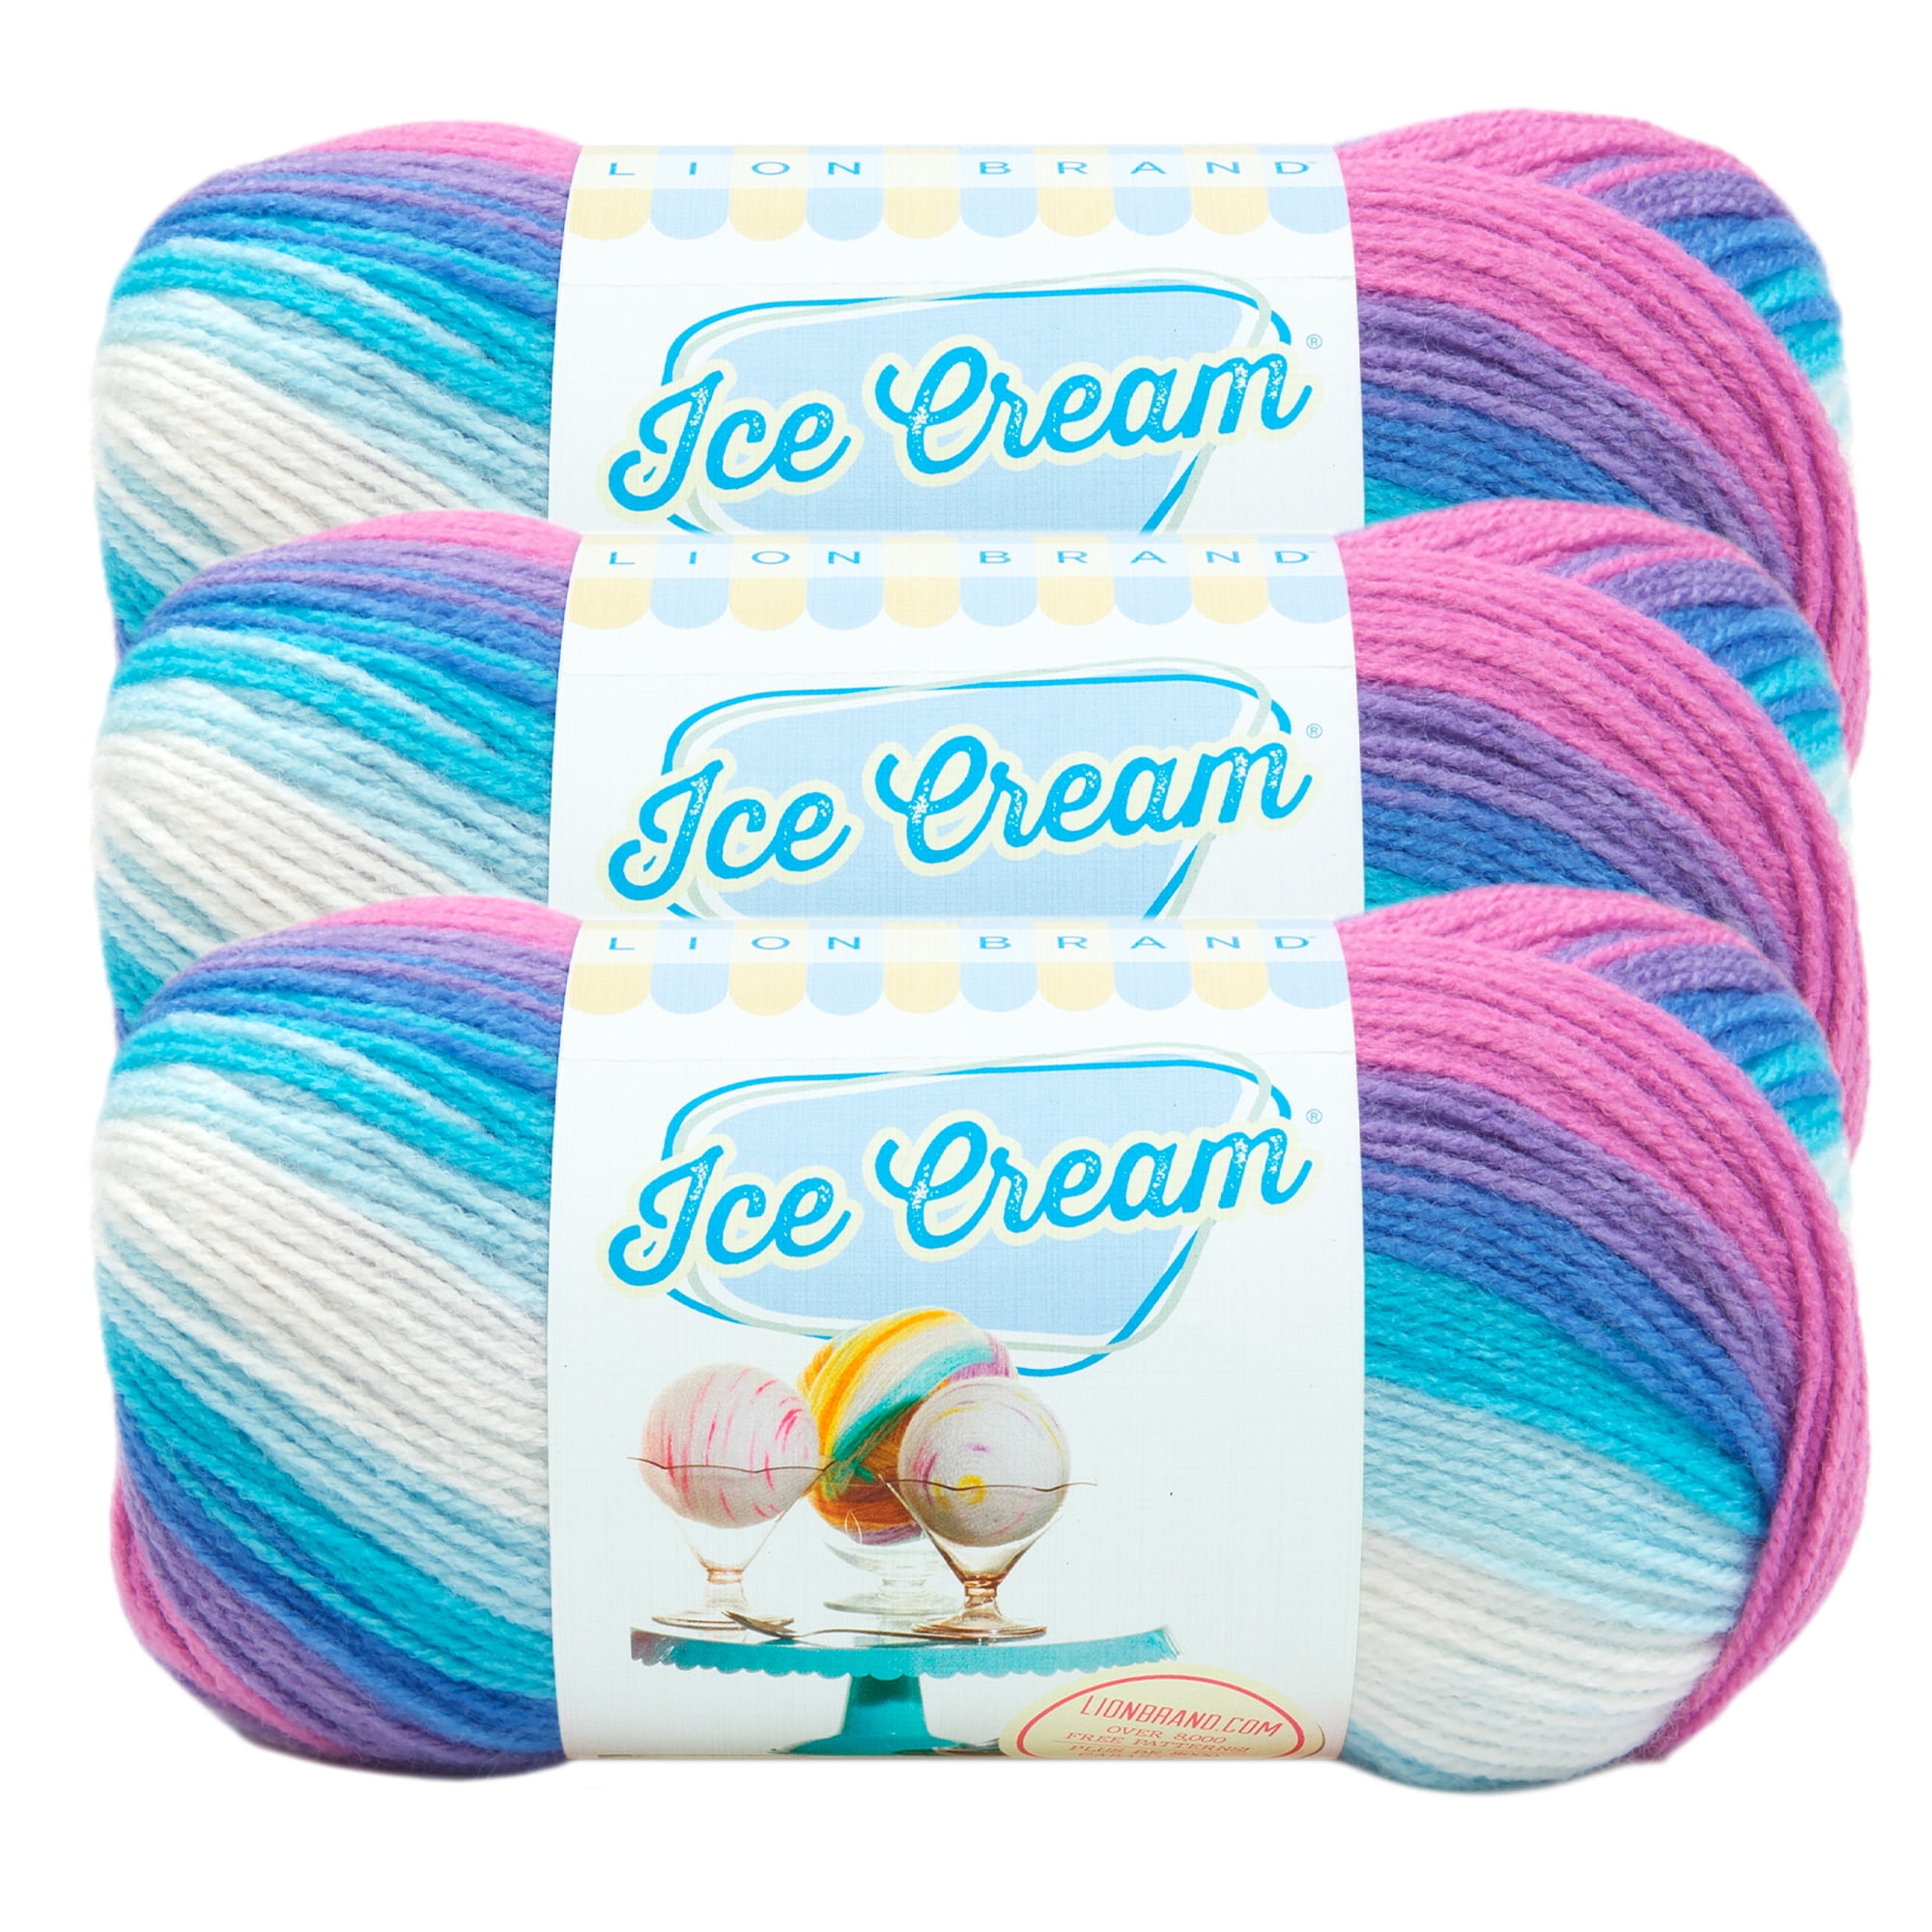 Lion Brand Ice Cream Cotton Blend Yarn-Blueberry, 1 - Ralphs